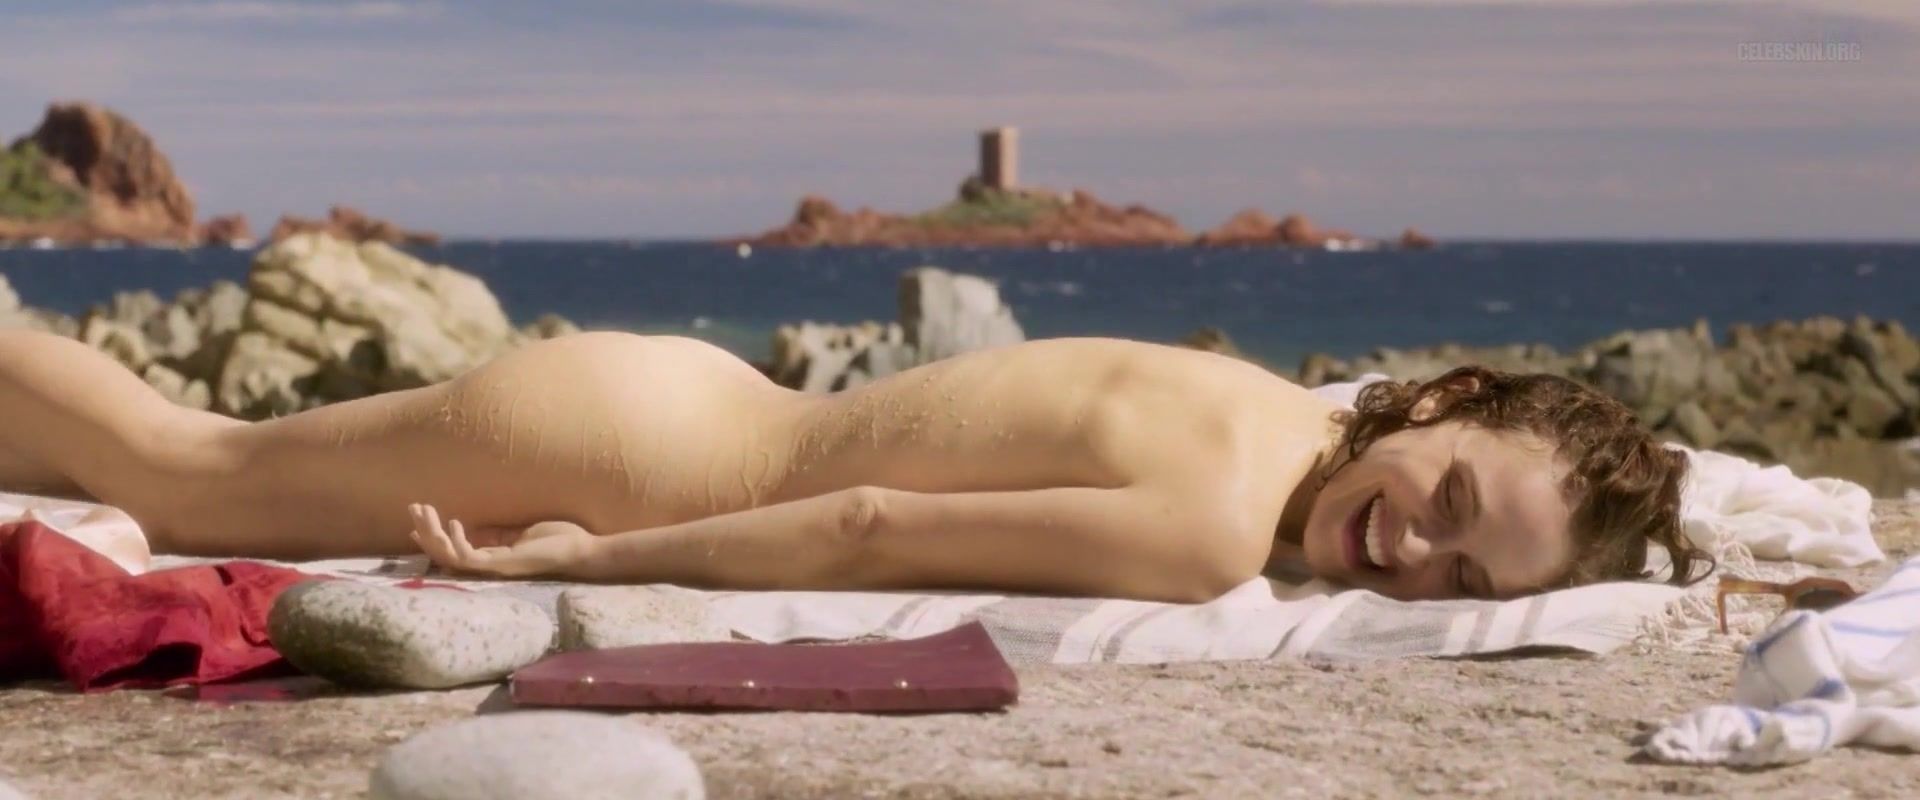 91Porn Celebrity nude scene | Natalie Portman naked - Planetarium (2016) Casada - 1